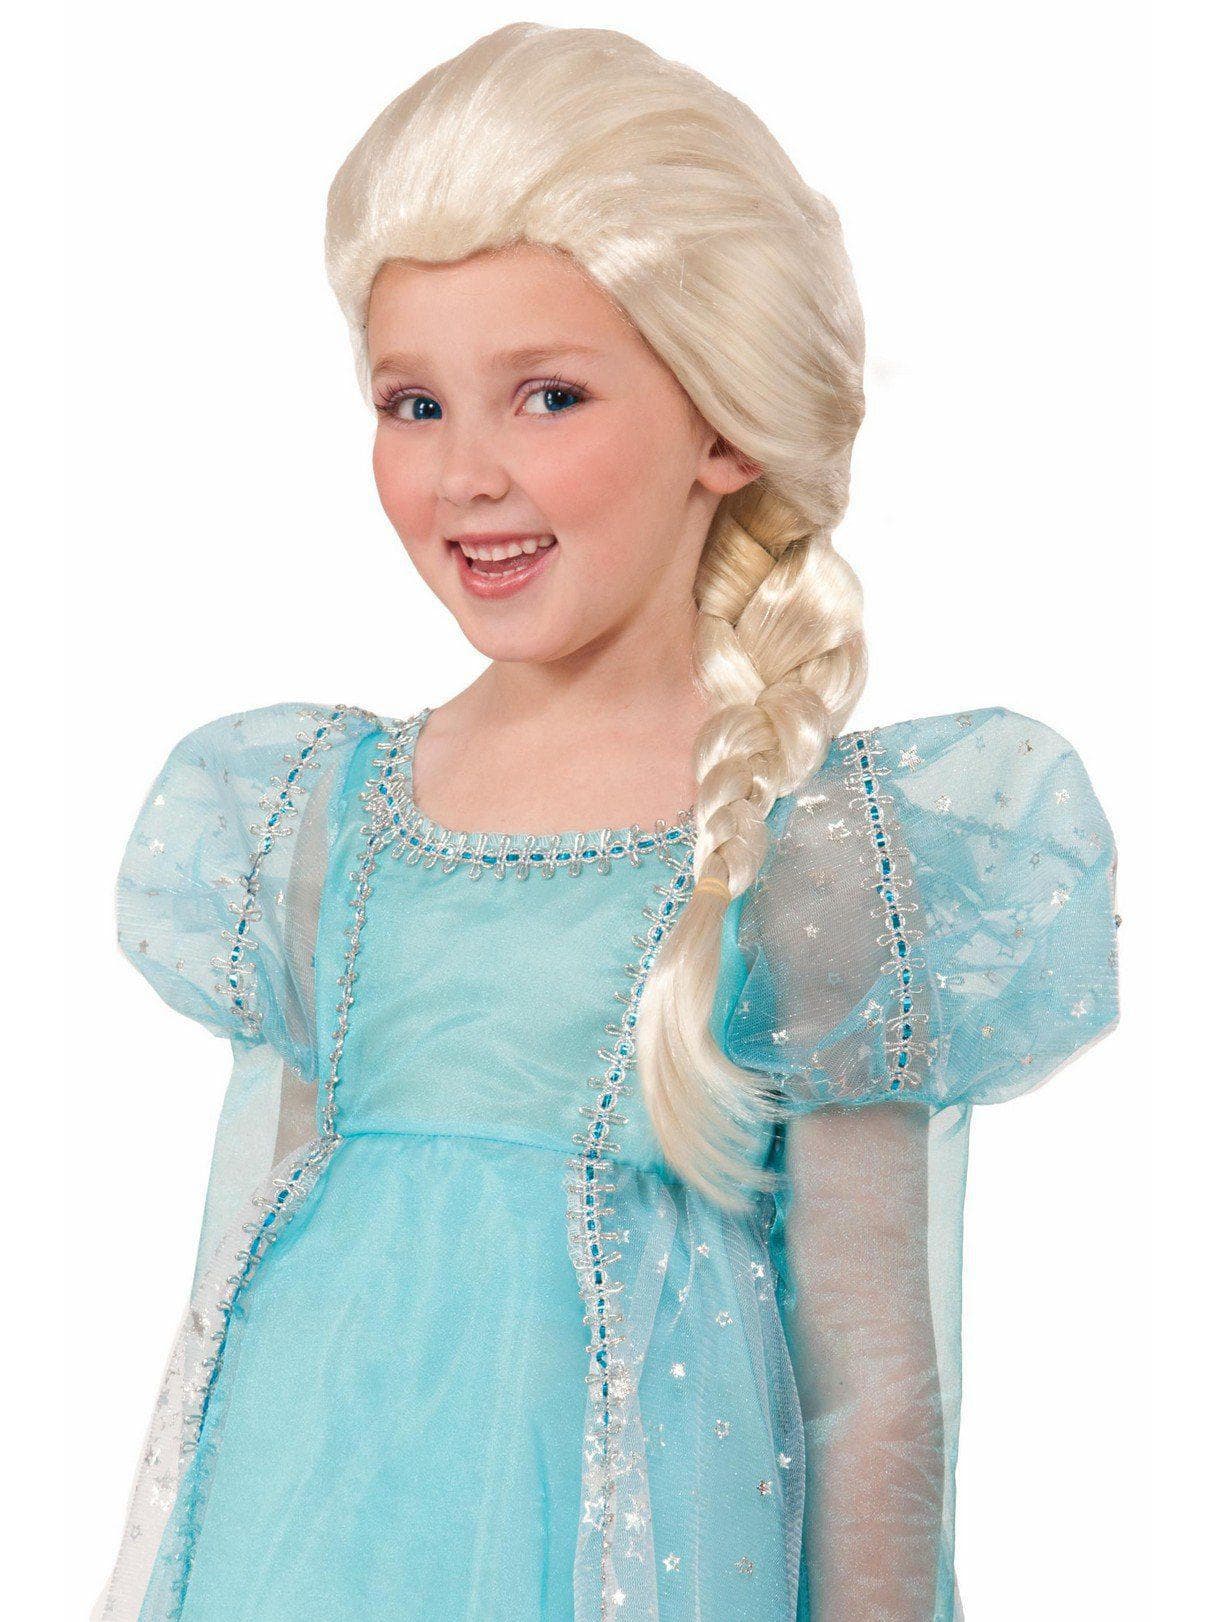 Kids' Blonde Braided Princess Wig - costumes.com